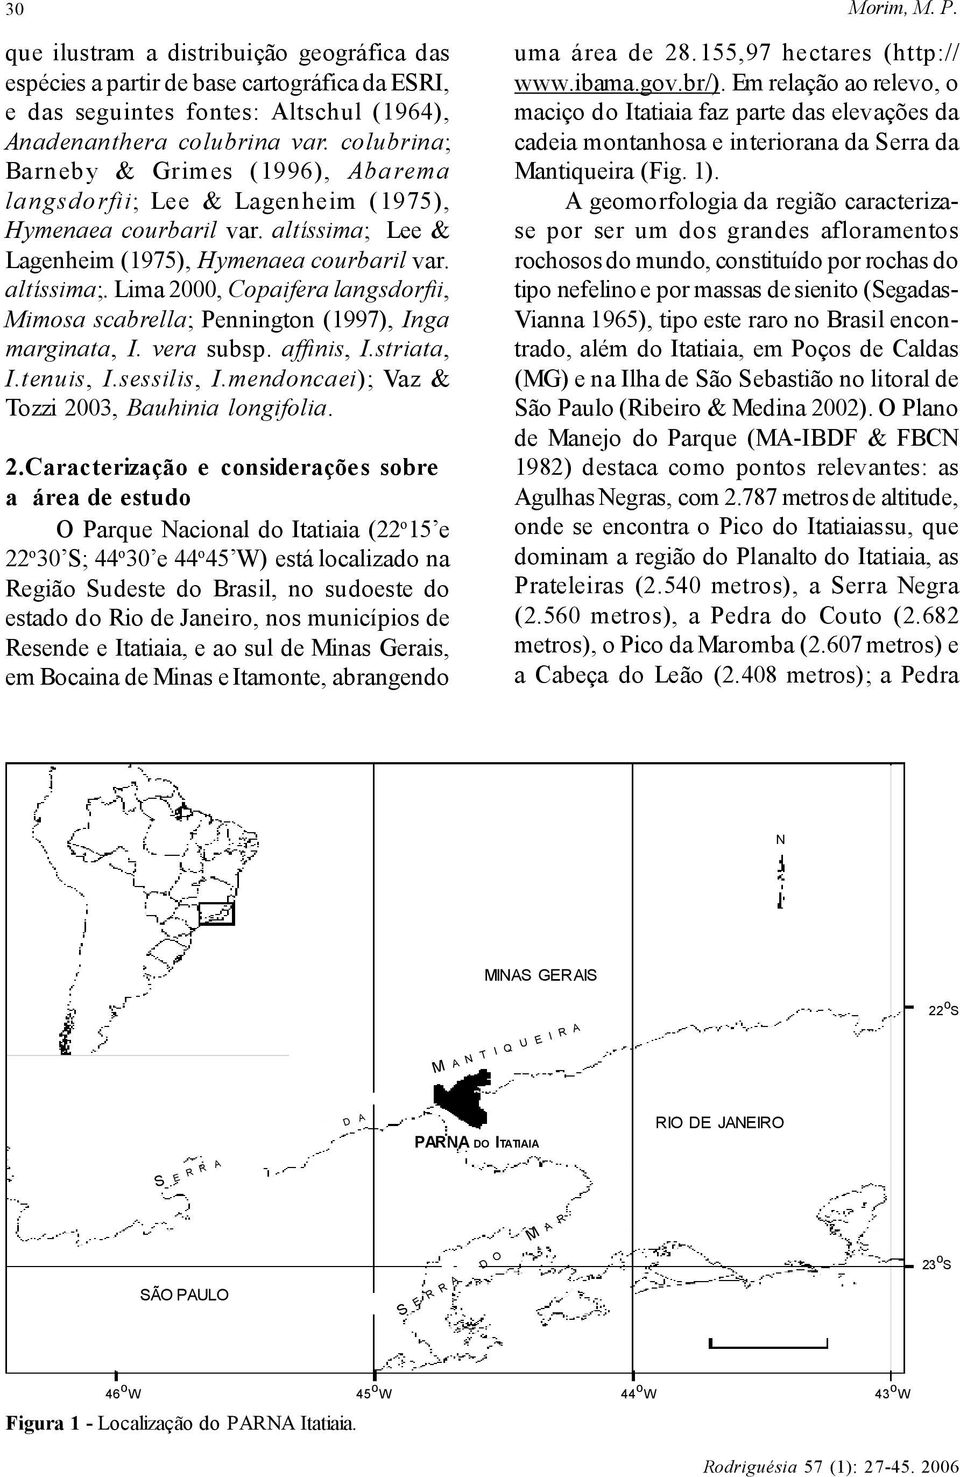 Lee & Lagenheim (1975), Hymenaea courbaril var. altíssima;. Lima 2000, Copaifera langsdorfii, Mimosa scabrella; Pennington (1997), Inga marginata, I. vera subsp. affinis, I.striata, I.tenuis, I.